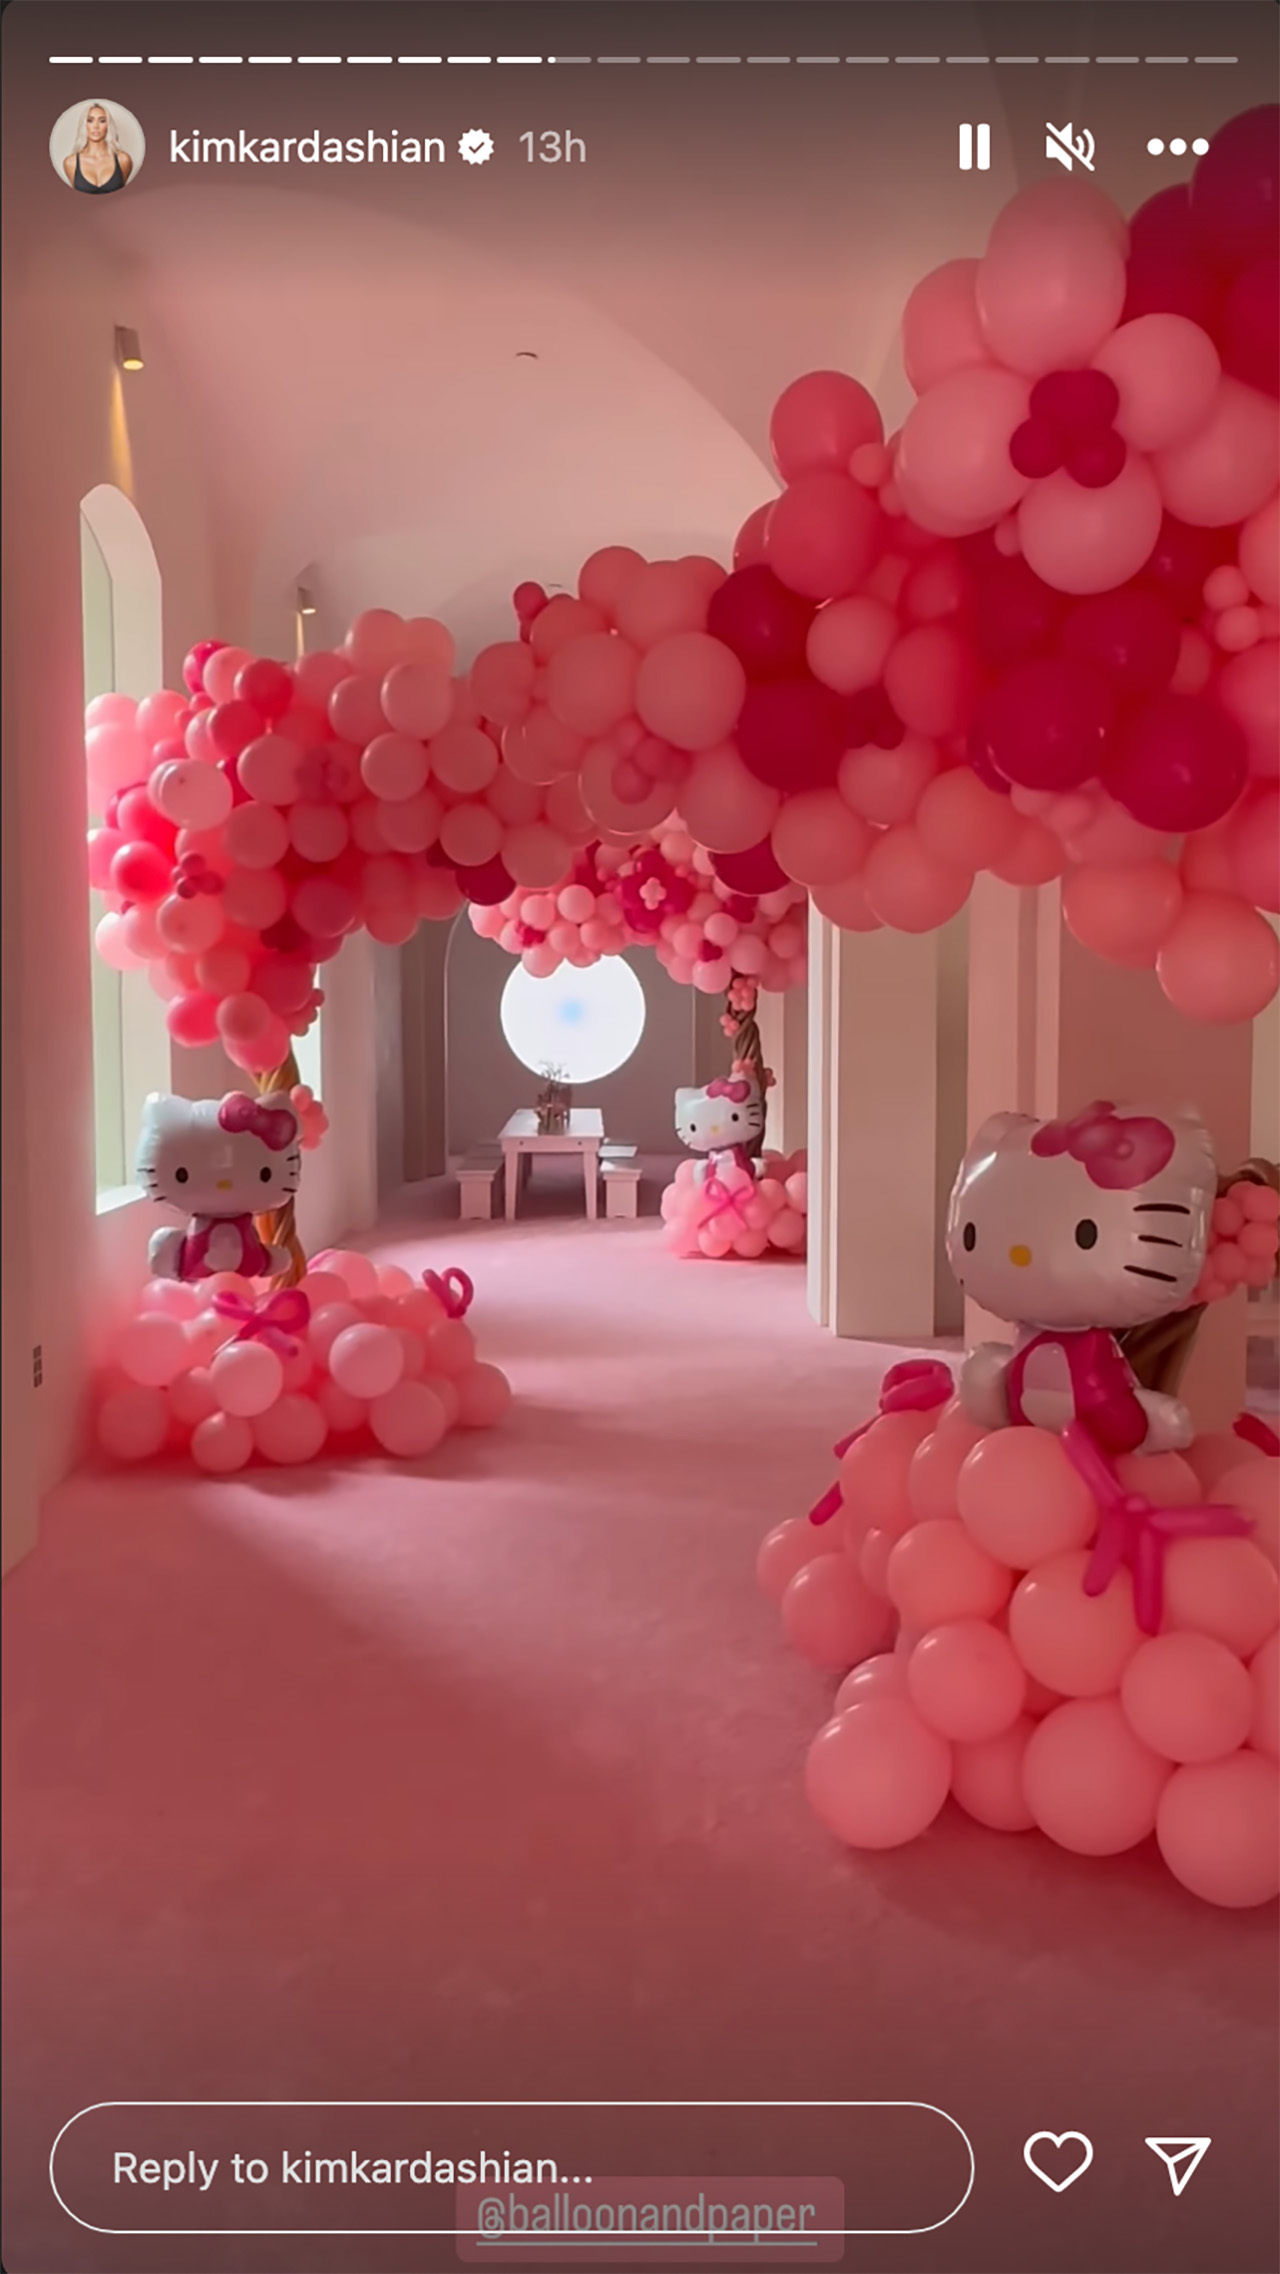 Chicago's Hello Kitty -themed birthday.